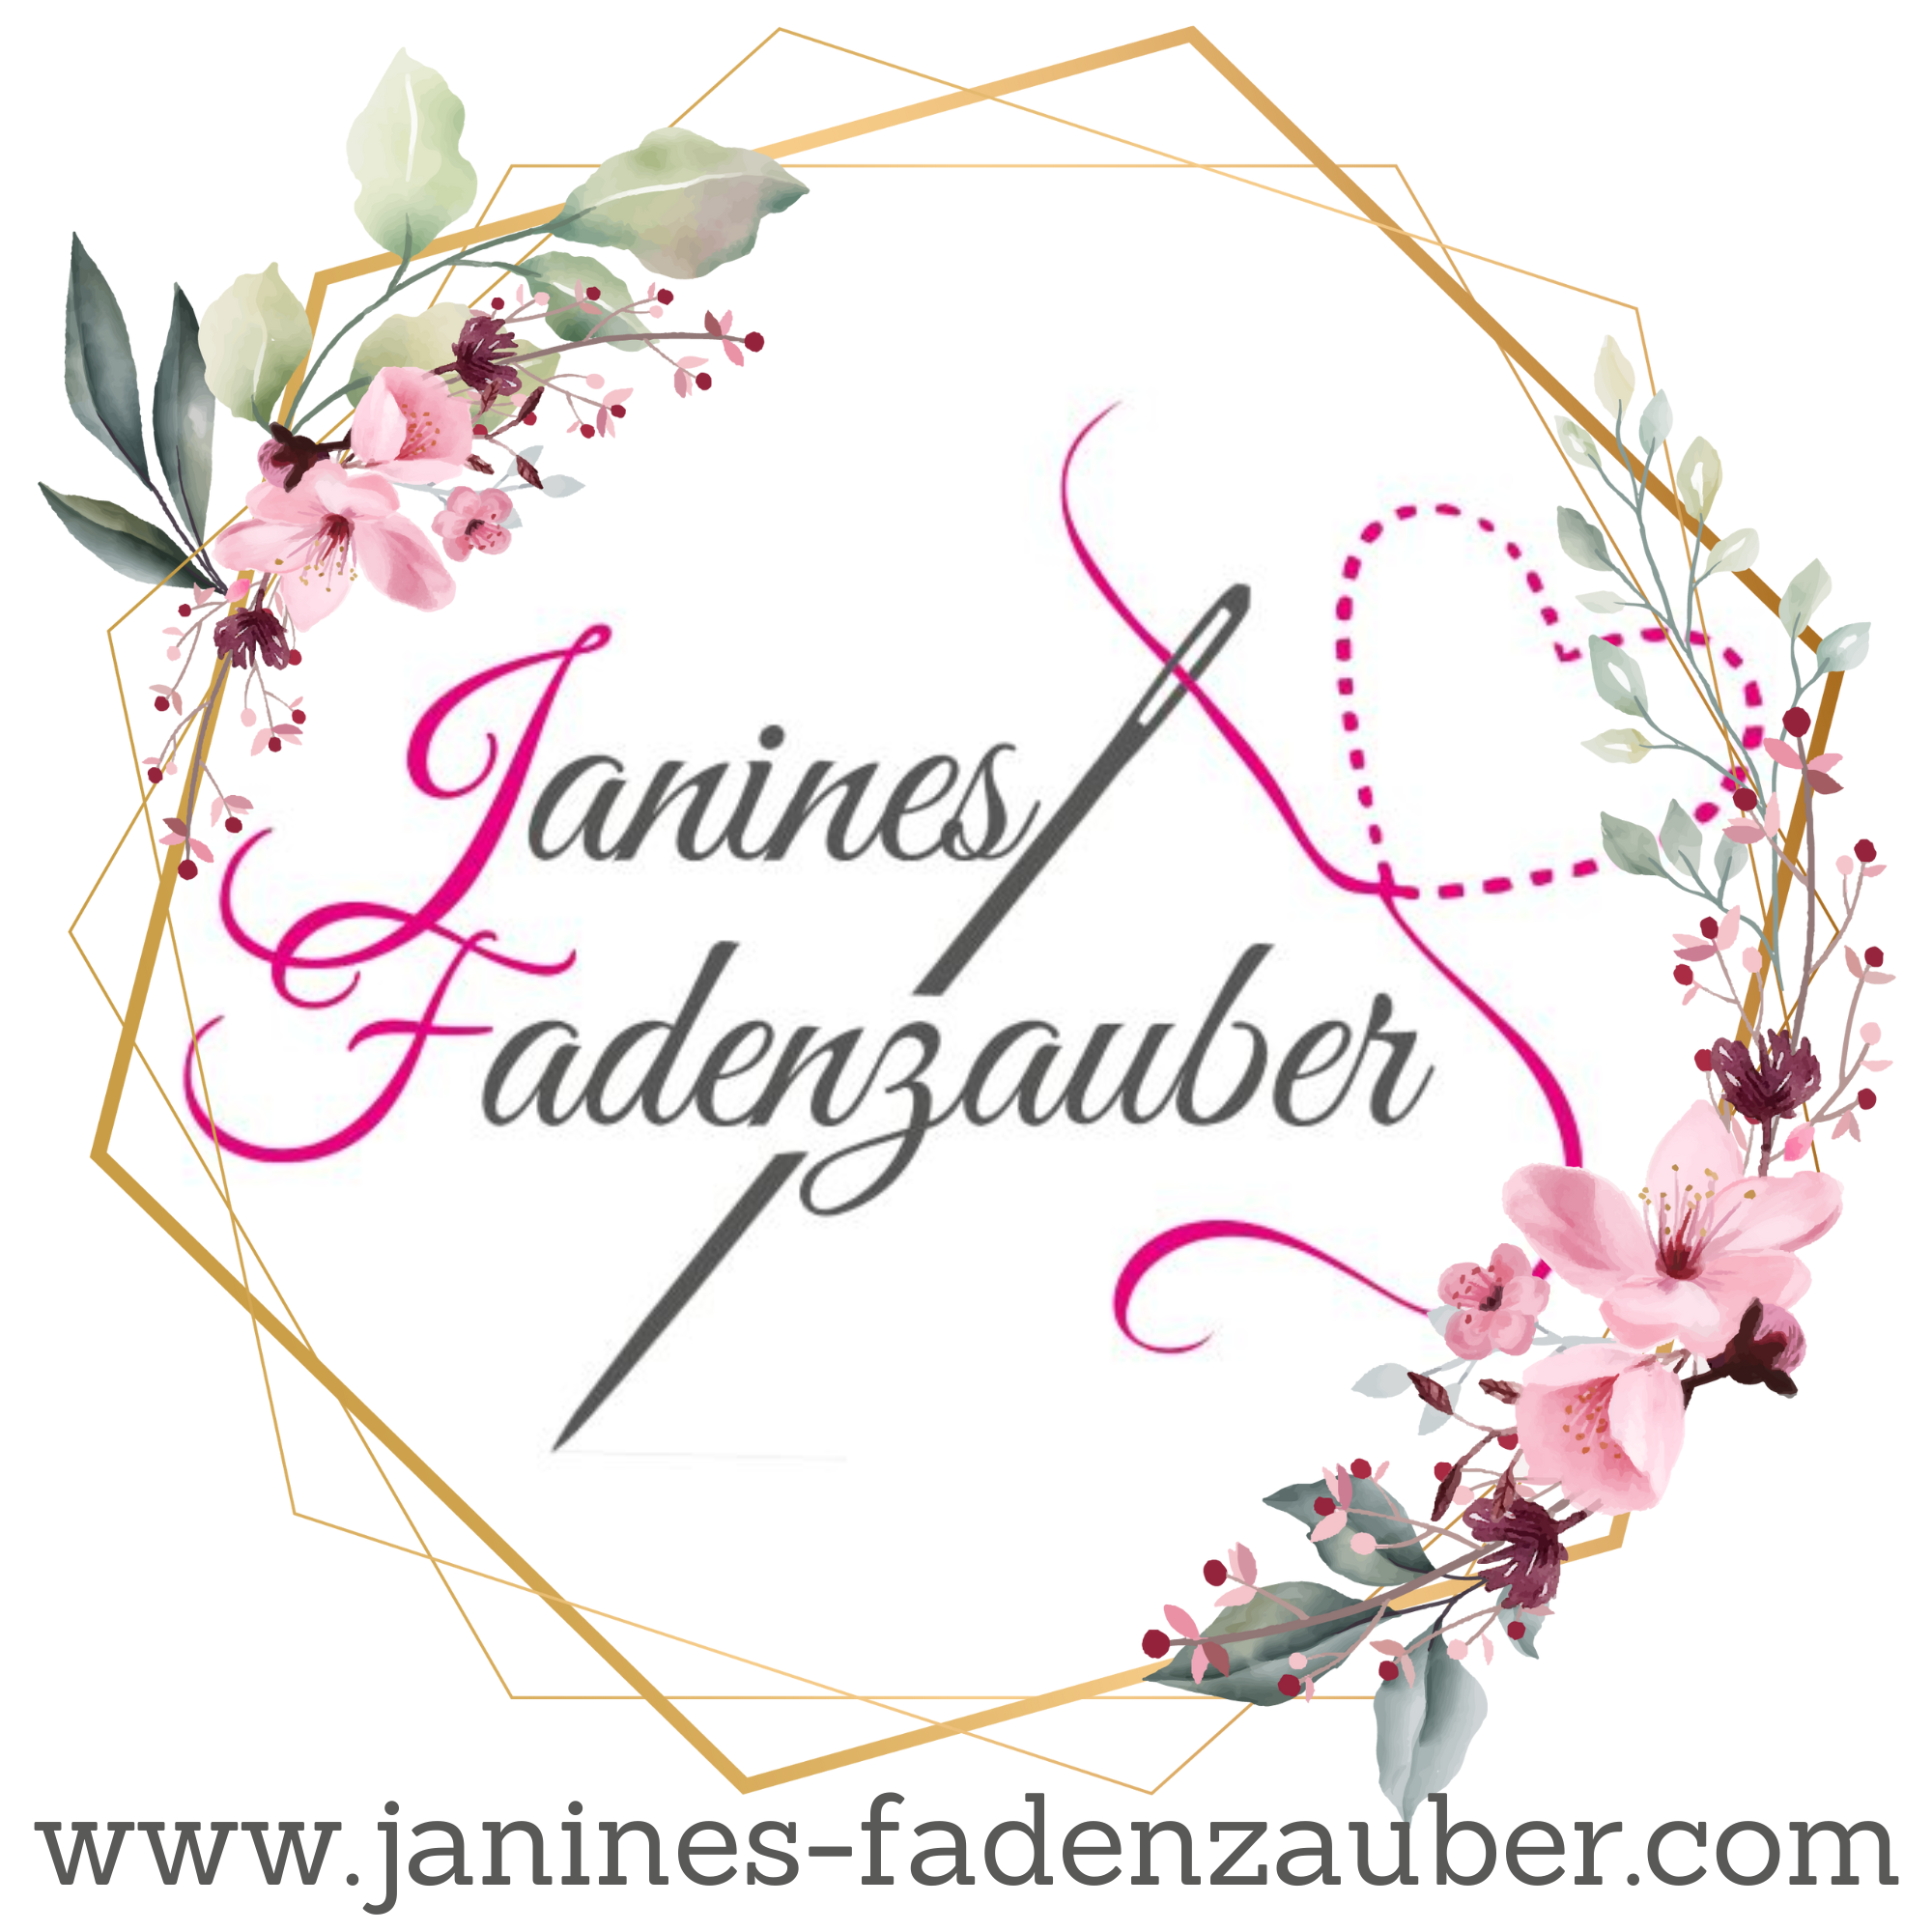 Janine's Fadenzauber